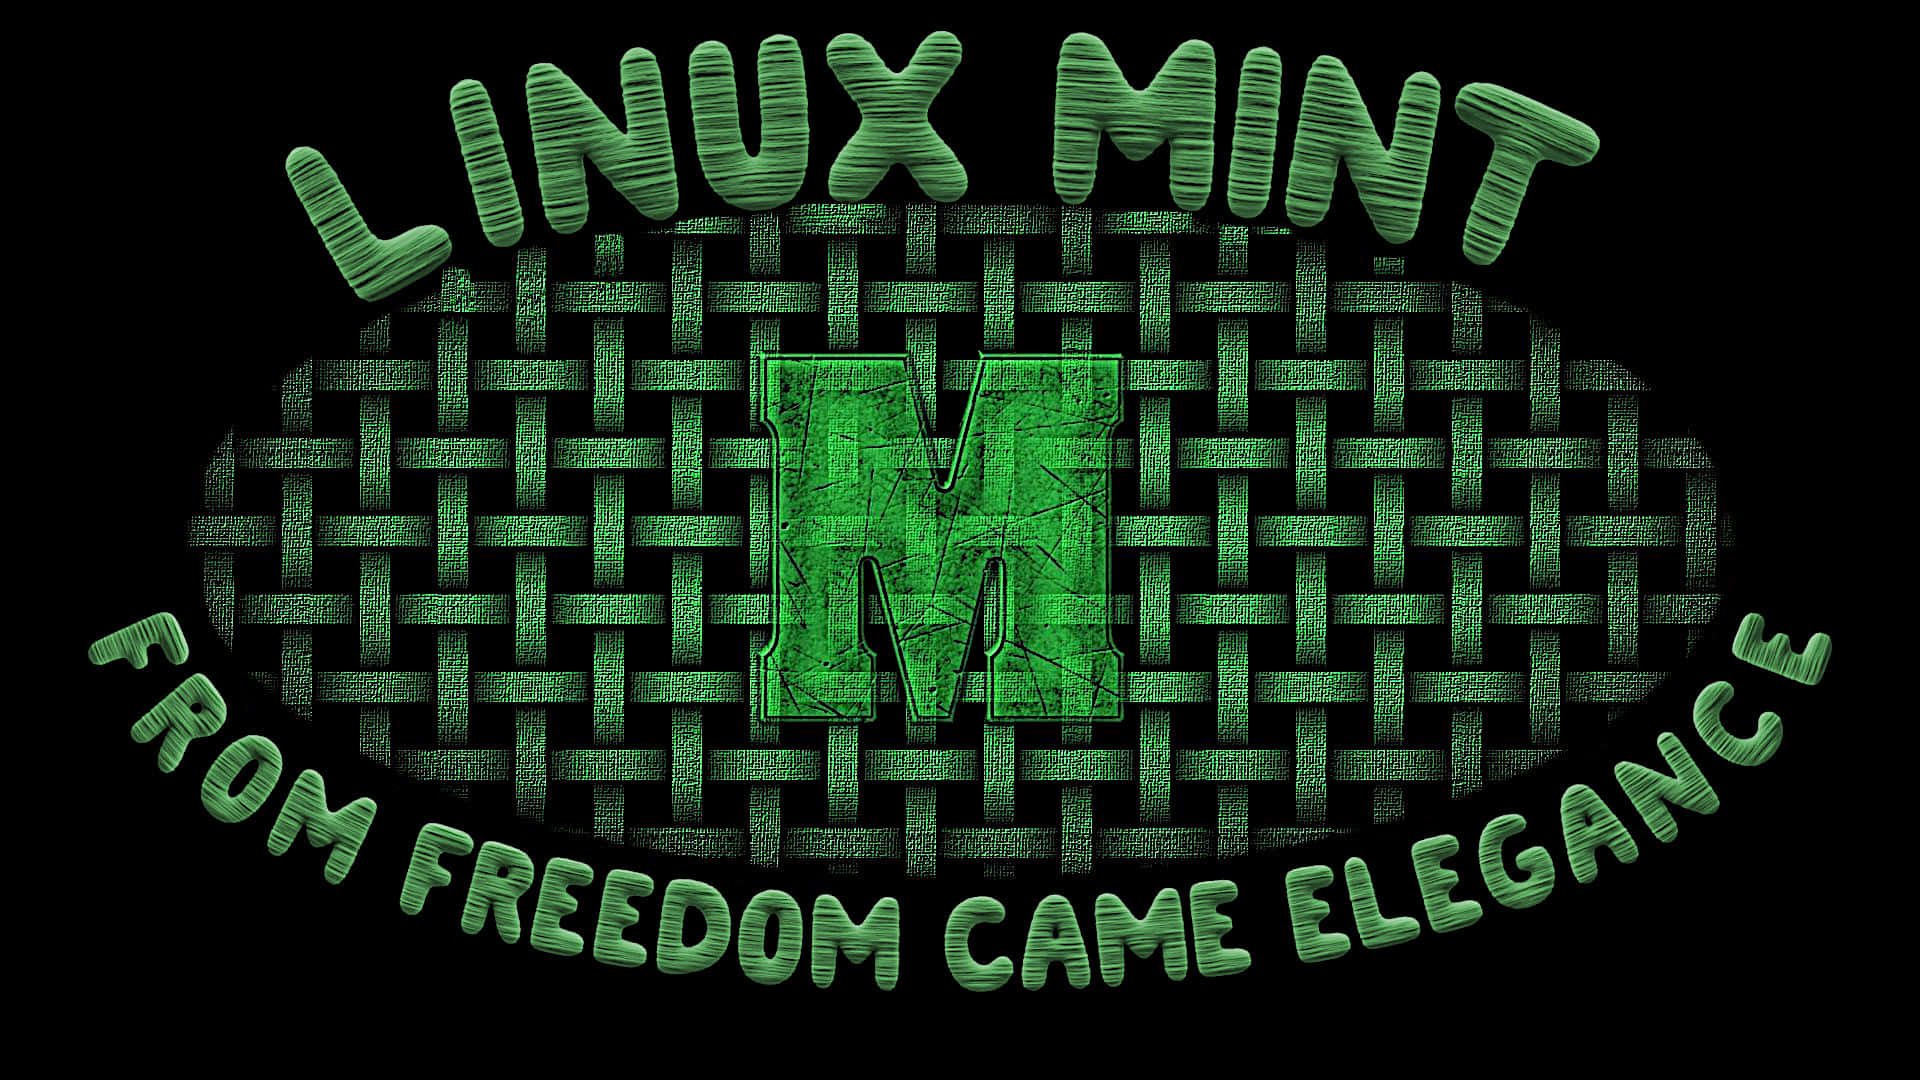 Enjoy the open source power of Linux Wallpaper